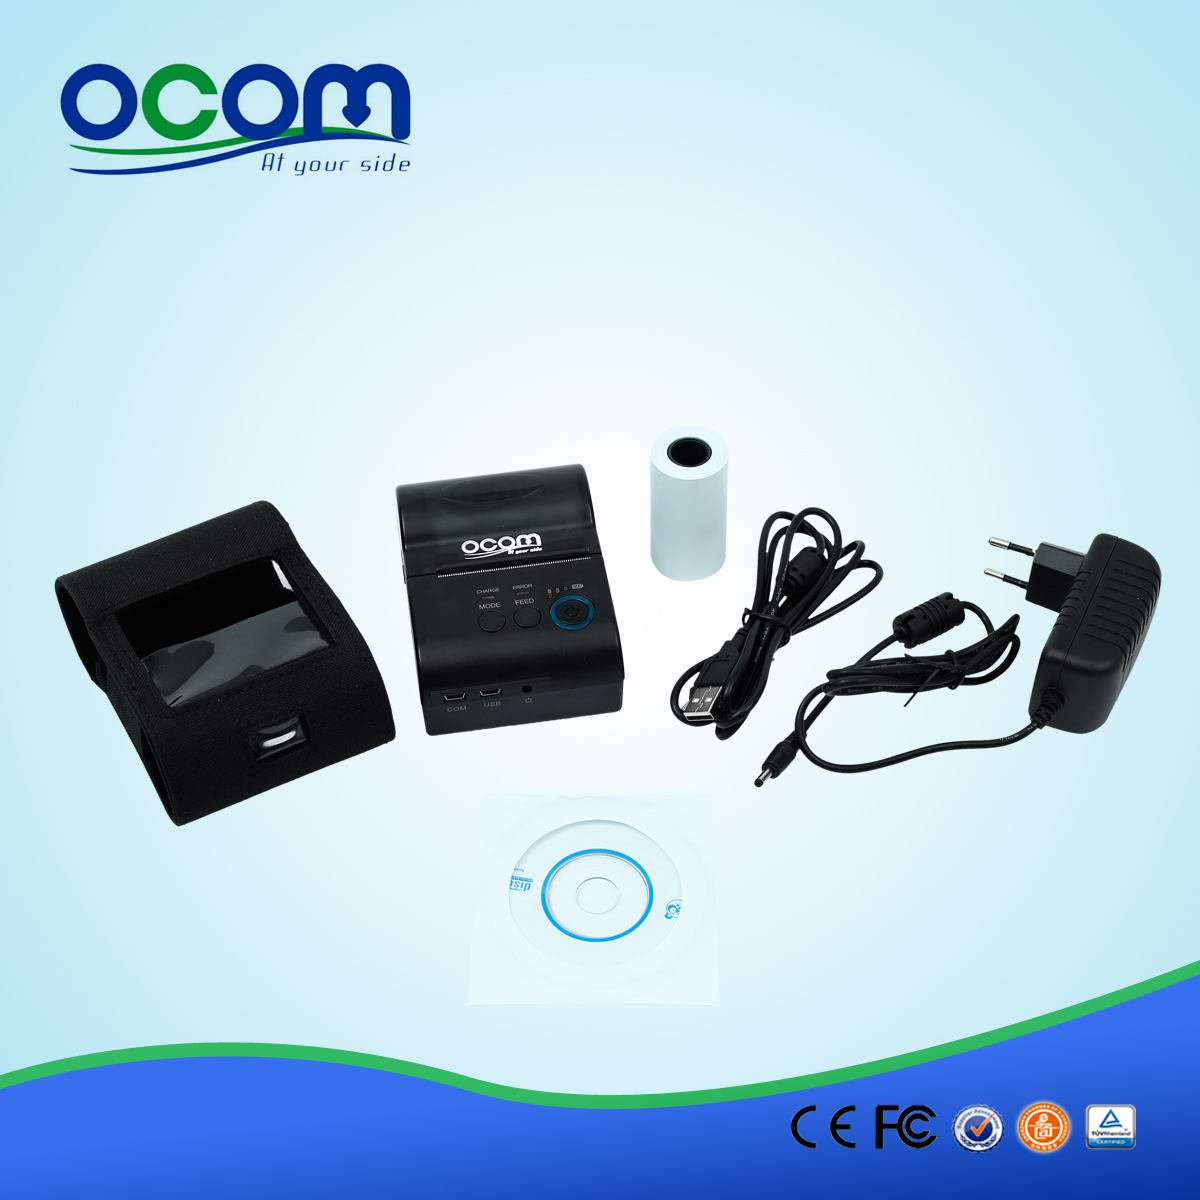 OCPP-M03: 2 pollici palmare Bluetooth stampante termica per ricevute per Android